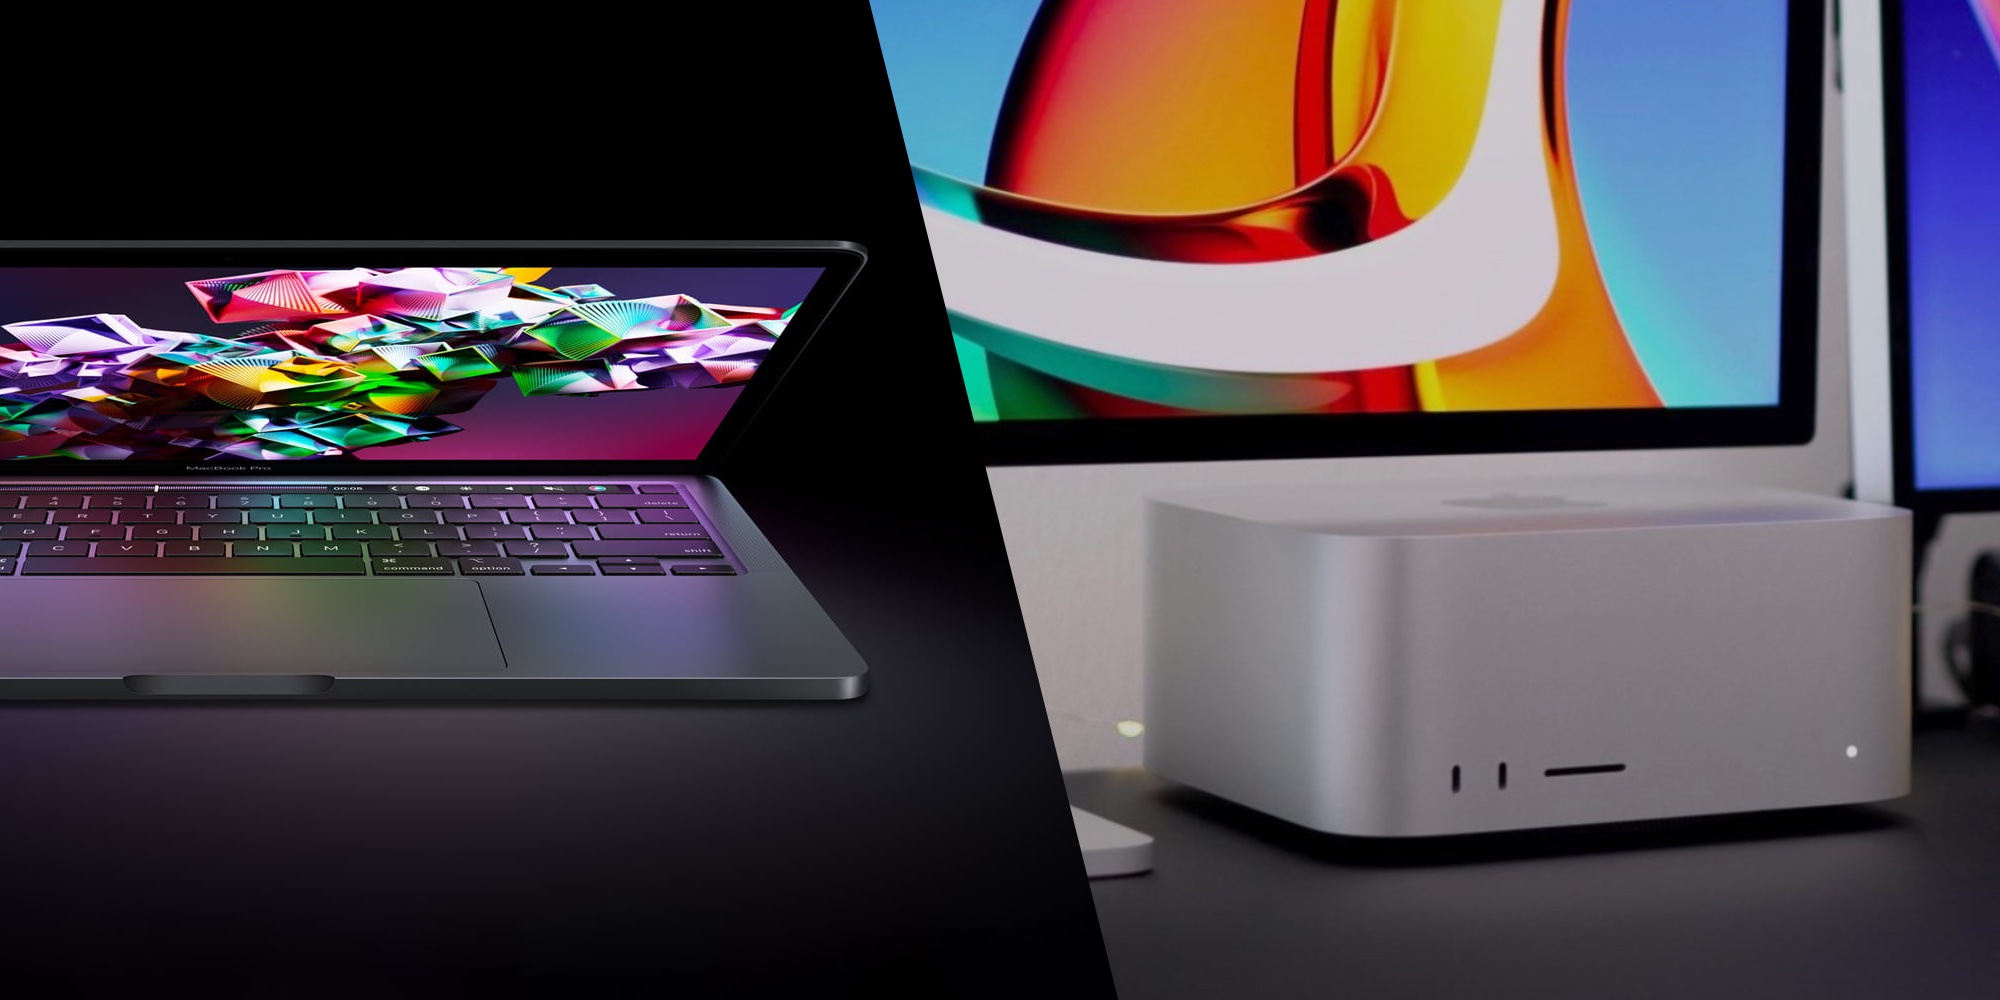 M2 MacBook Pro and the Mac Studio